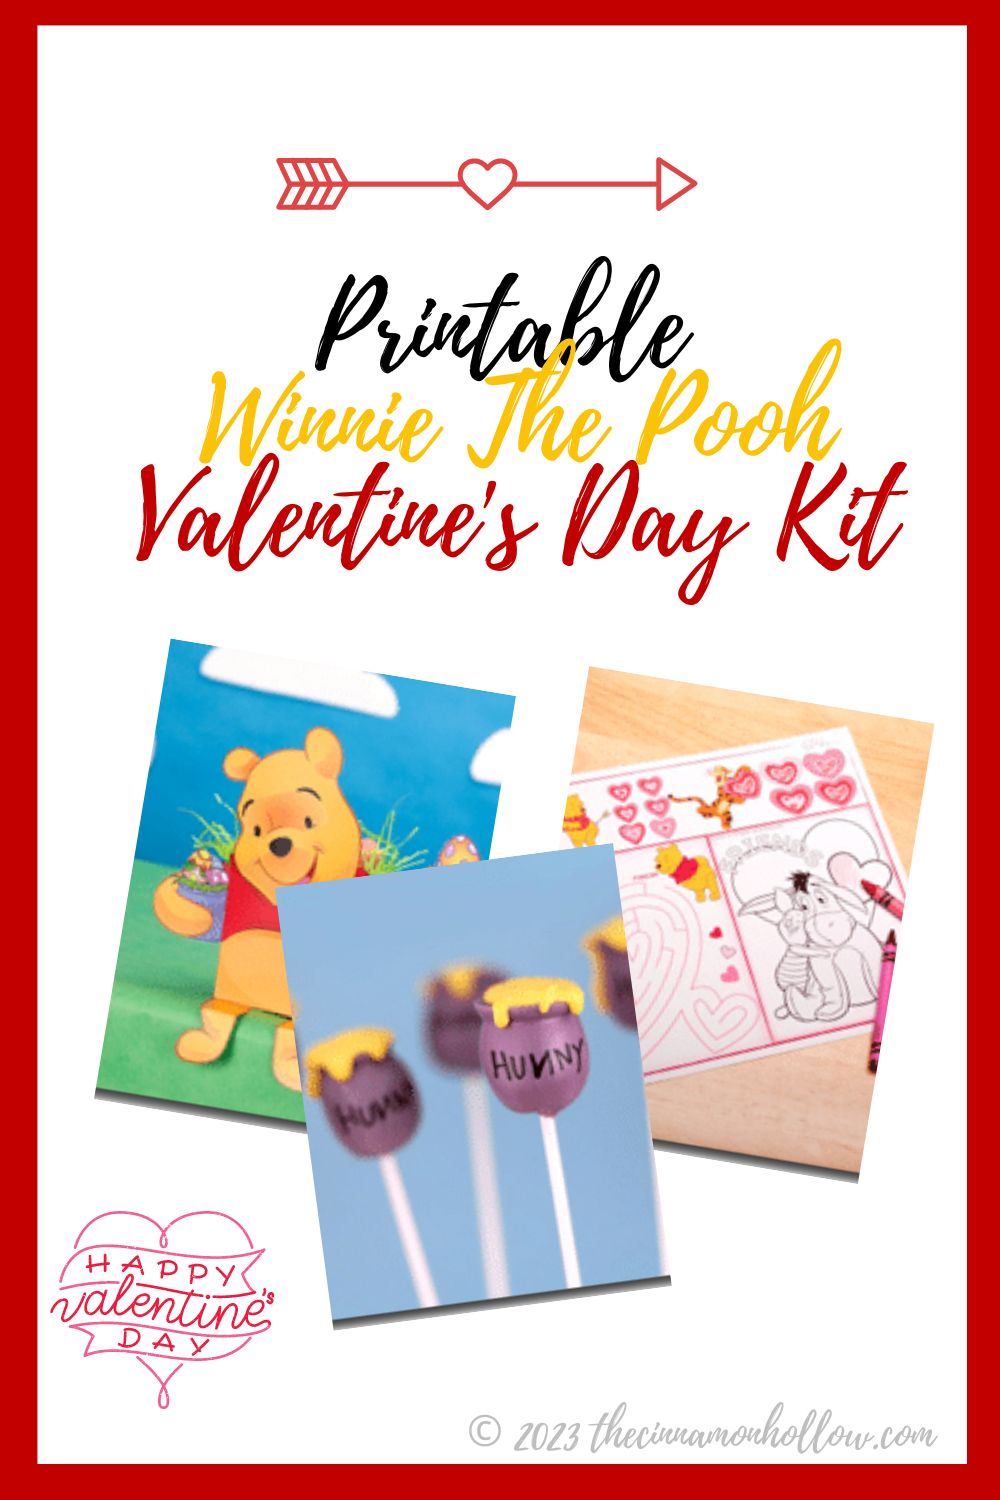 Printable Winnie The Pooh Valentine's Day Kit Pin